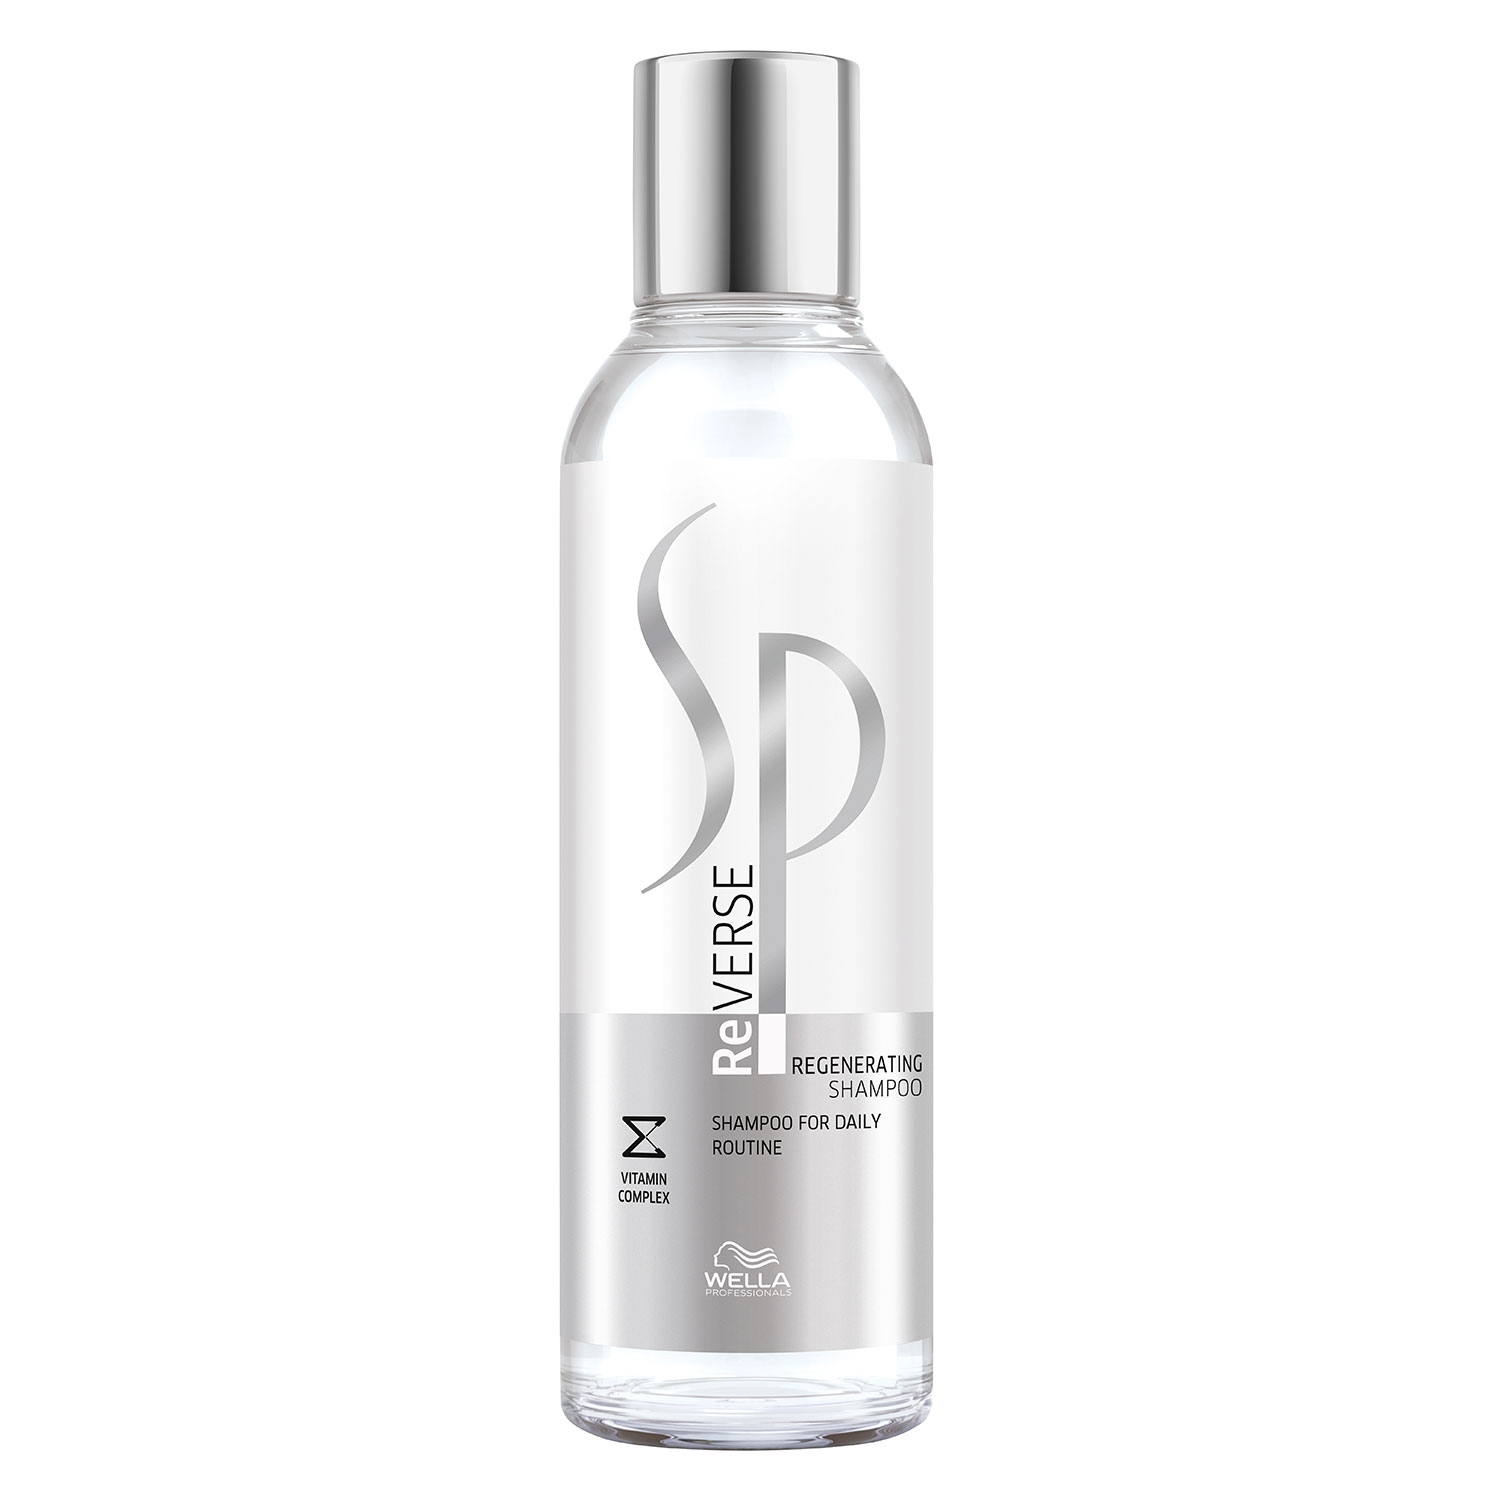 Produktbild von SP Reverse - Regenerating Shampoo